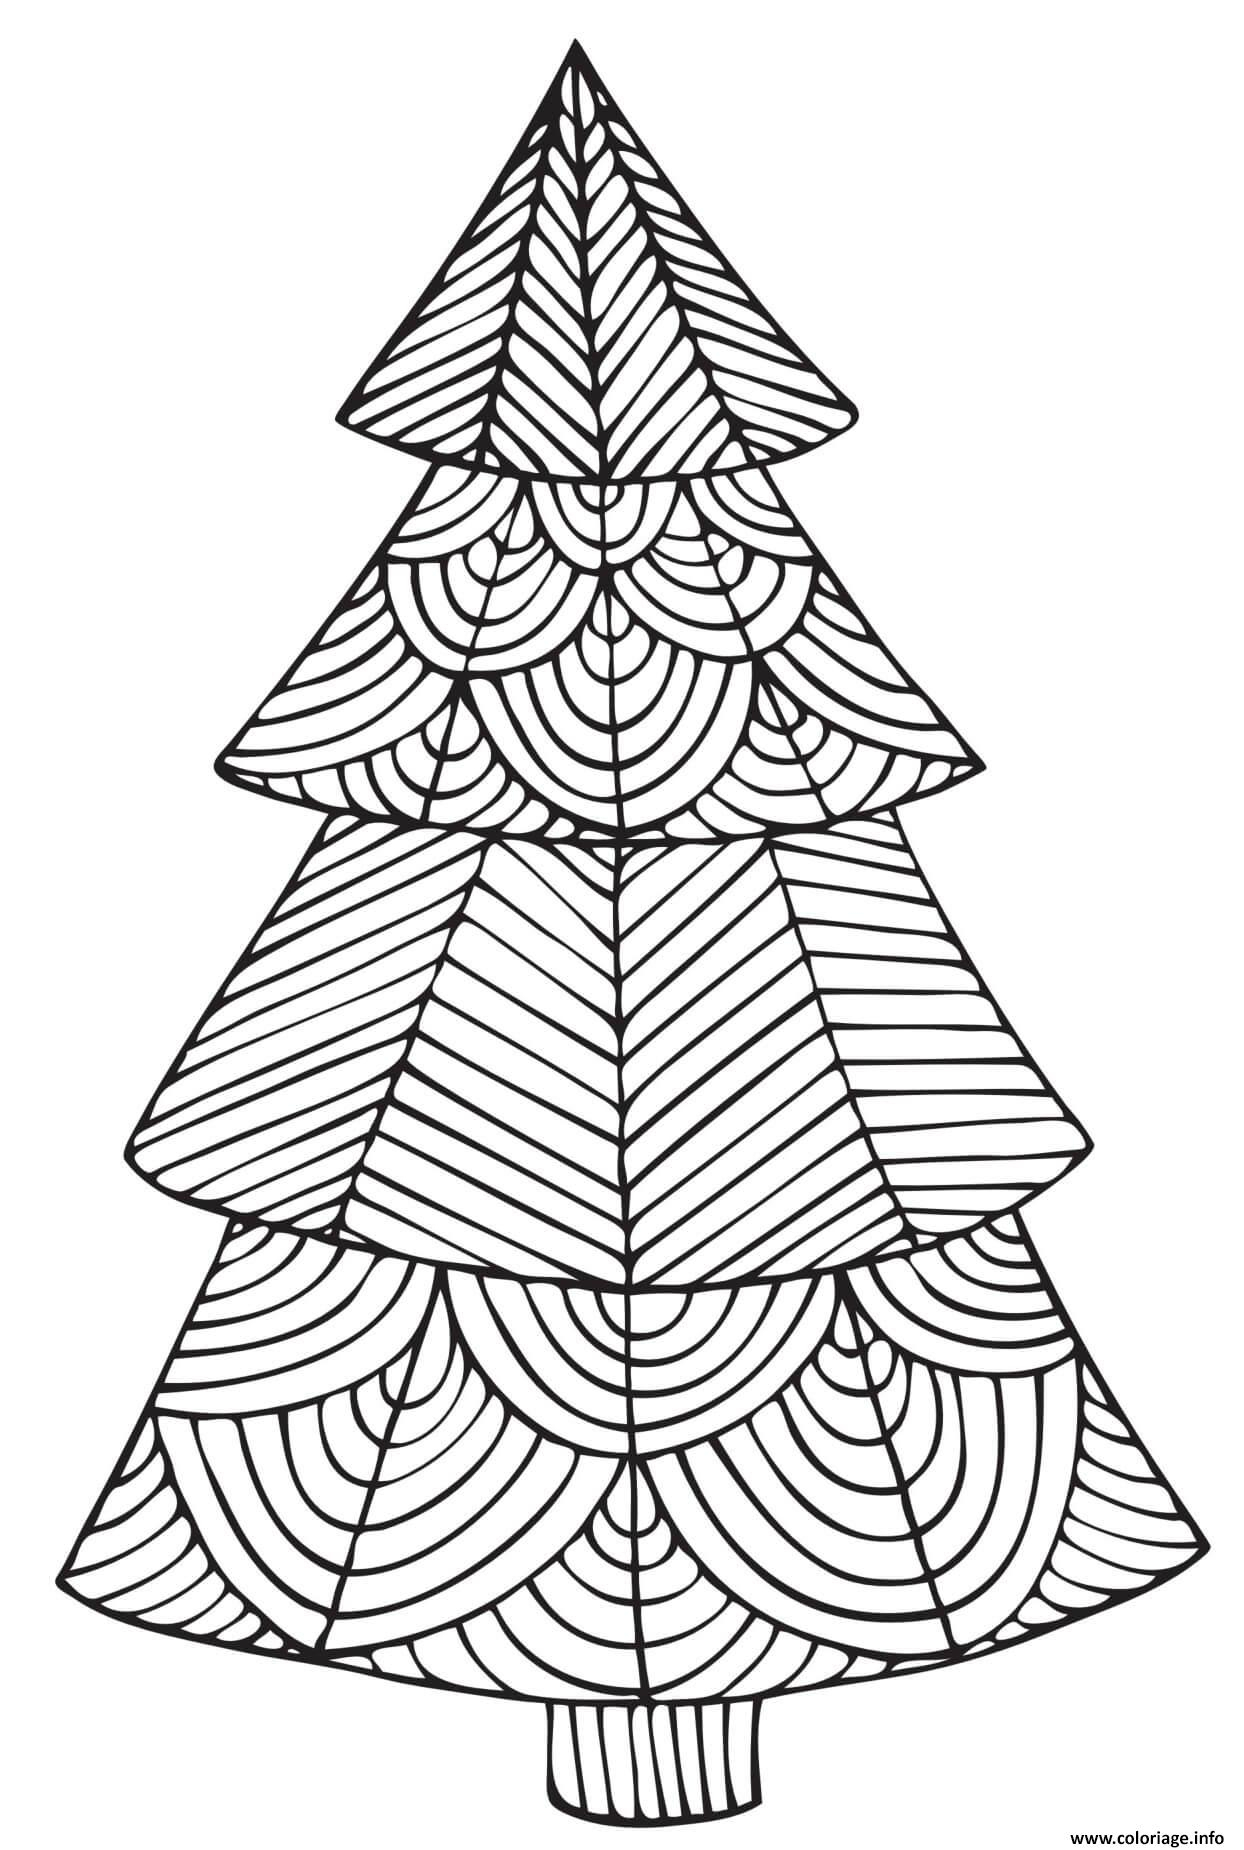 Coloriage Noel Mandala Geometric Sapin Dessin Noel Adulte concernant Coloriage Noel Gratuit Imprimer 